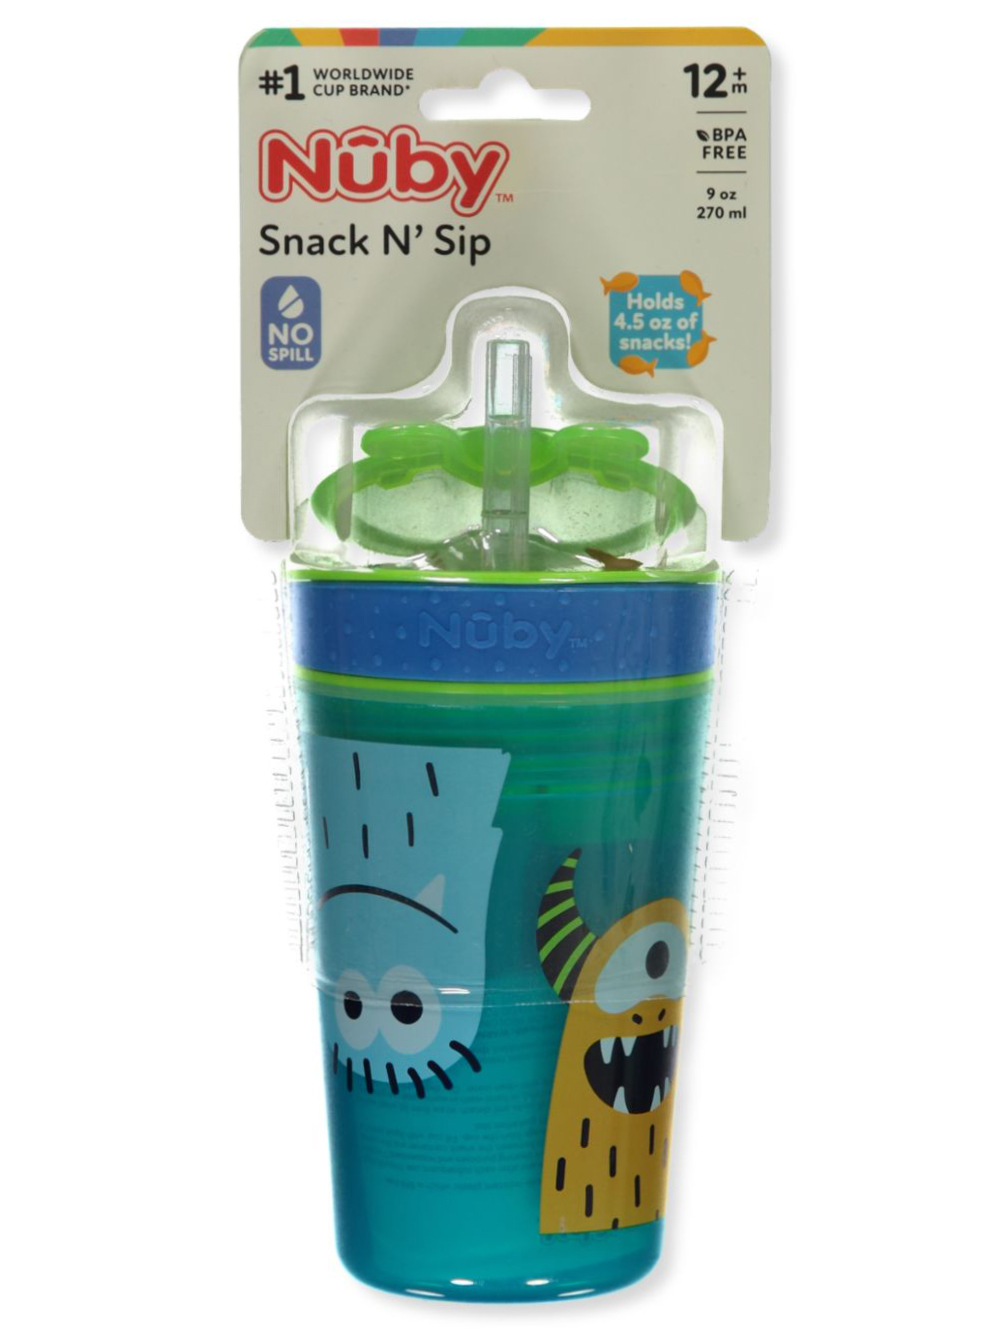 Nuby 1pk Snack N' Sip 2 in 1 Plastic Snack and Drink Cup, Multi color